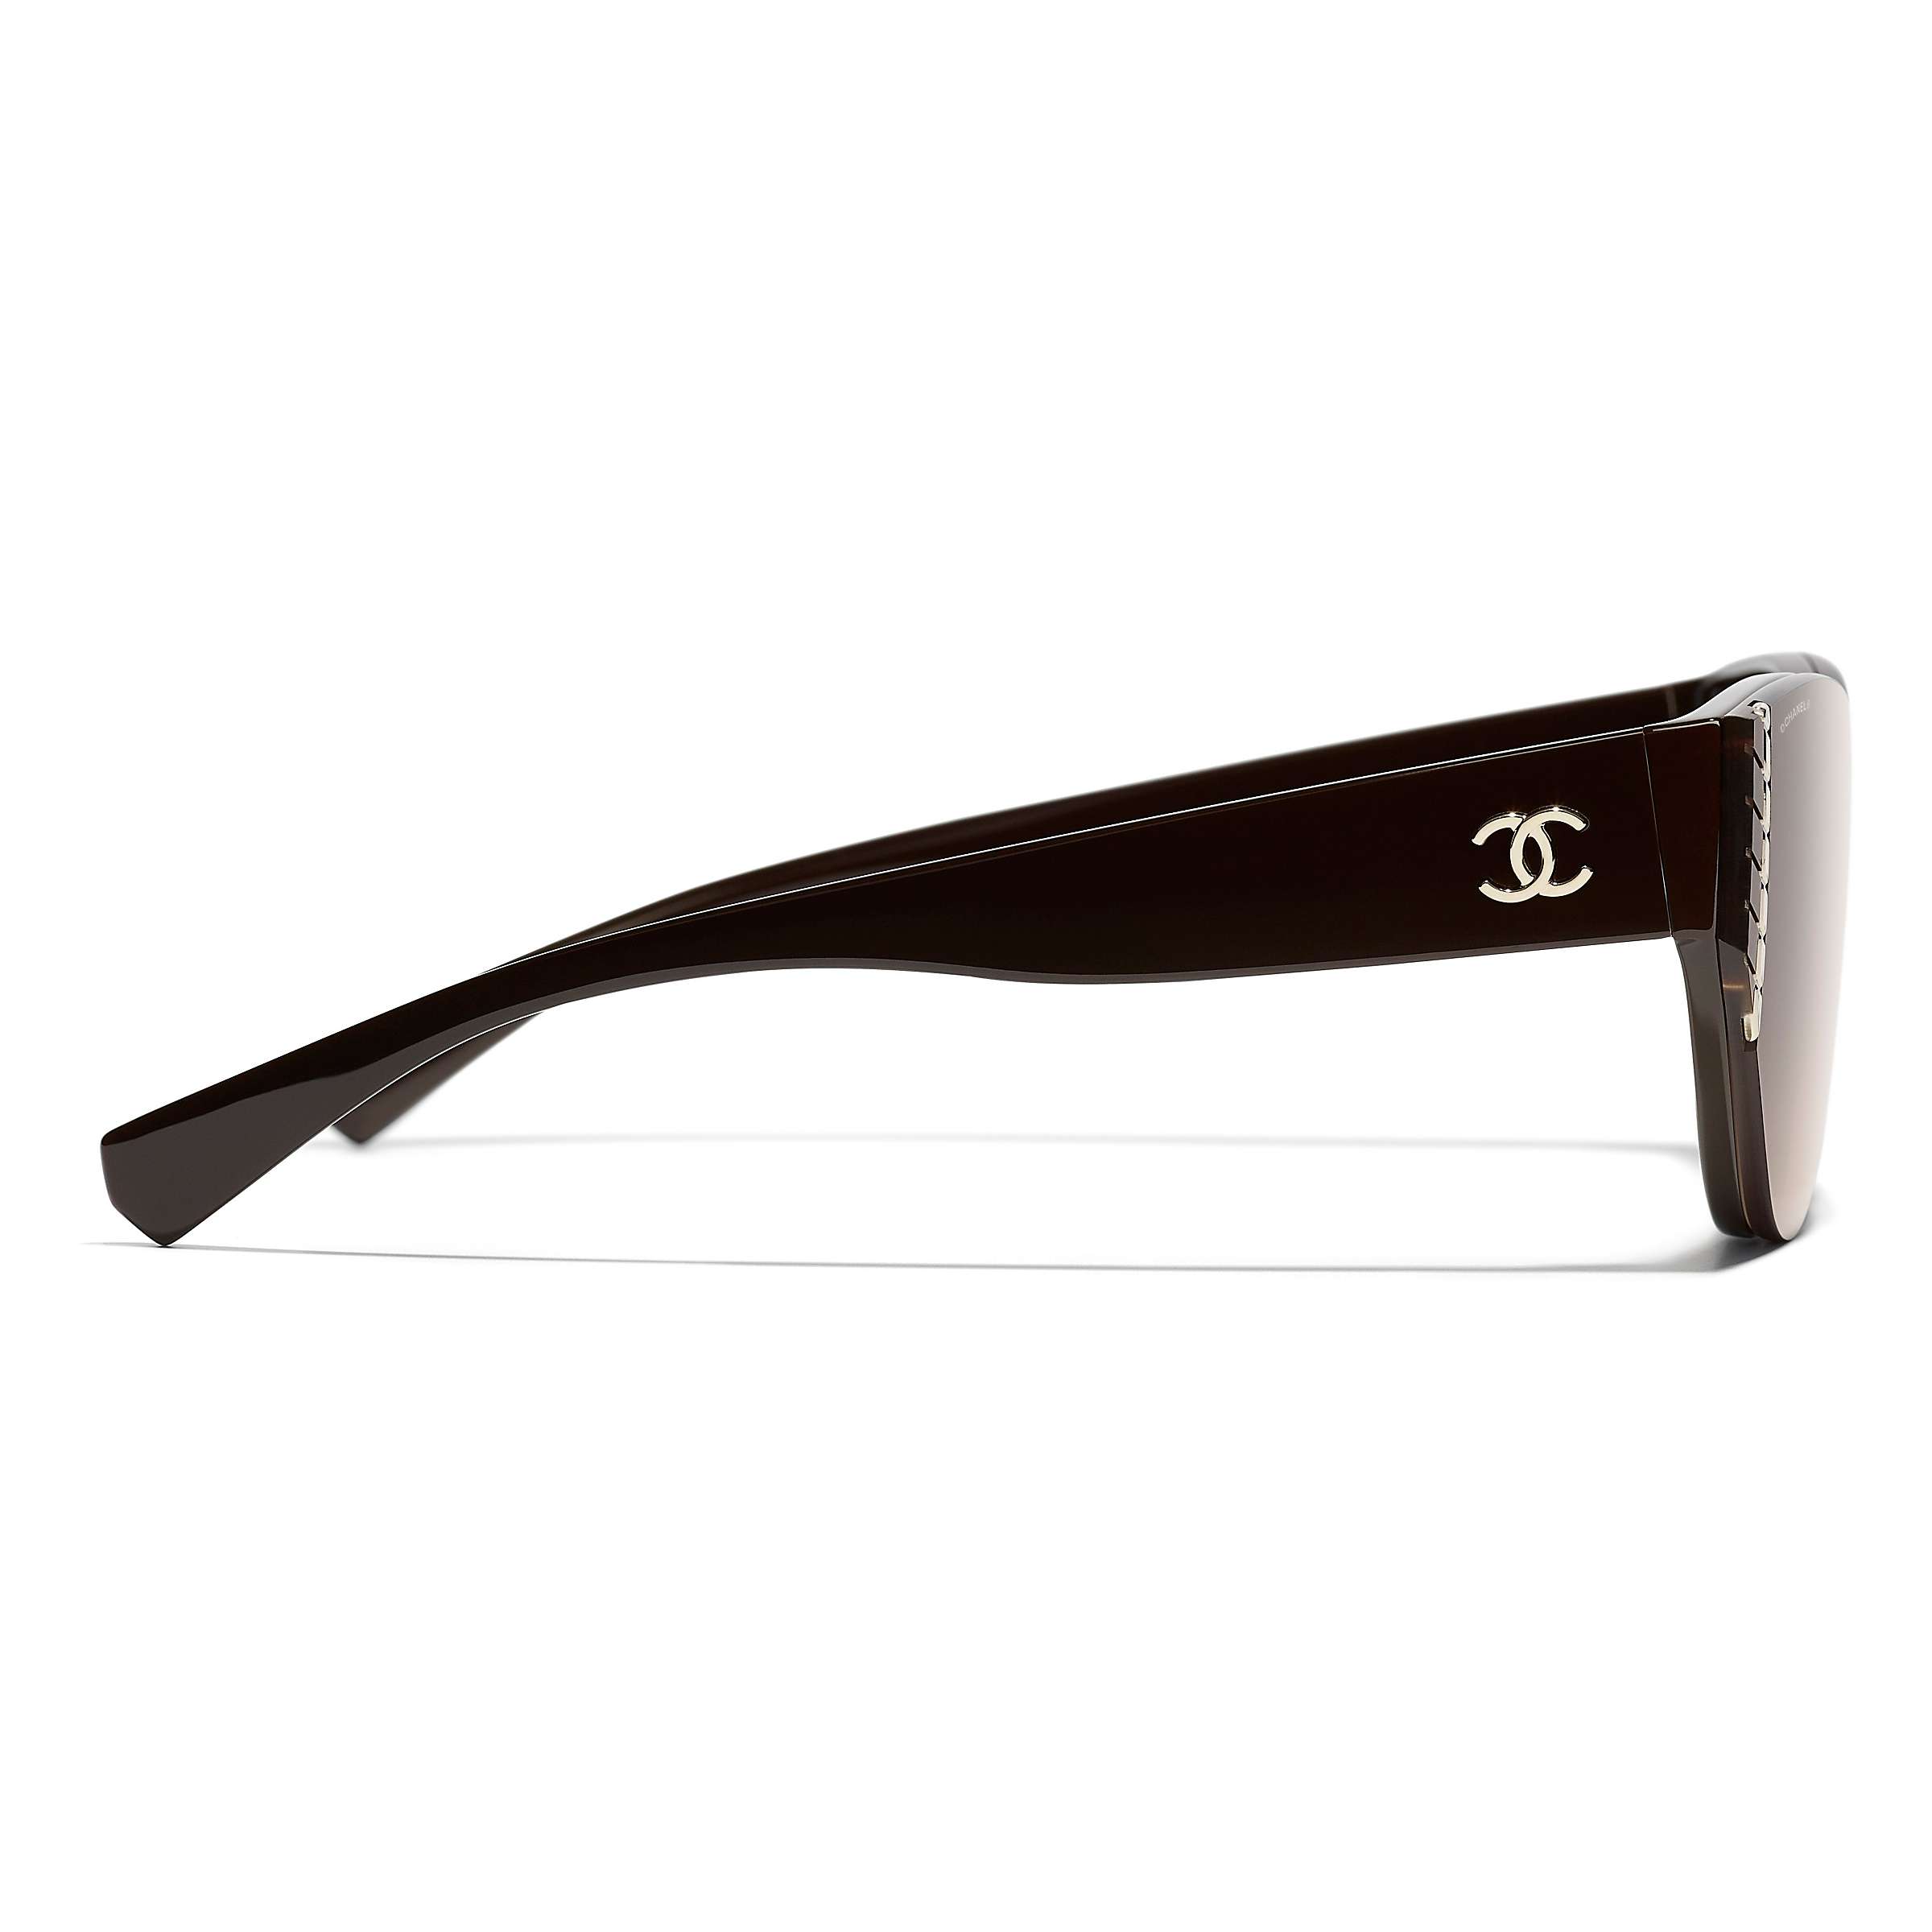 Buy CHANEL Oval Sunglasses CH6054 Dark Brown/Brown Gradient Online at johnlewis.com